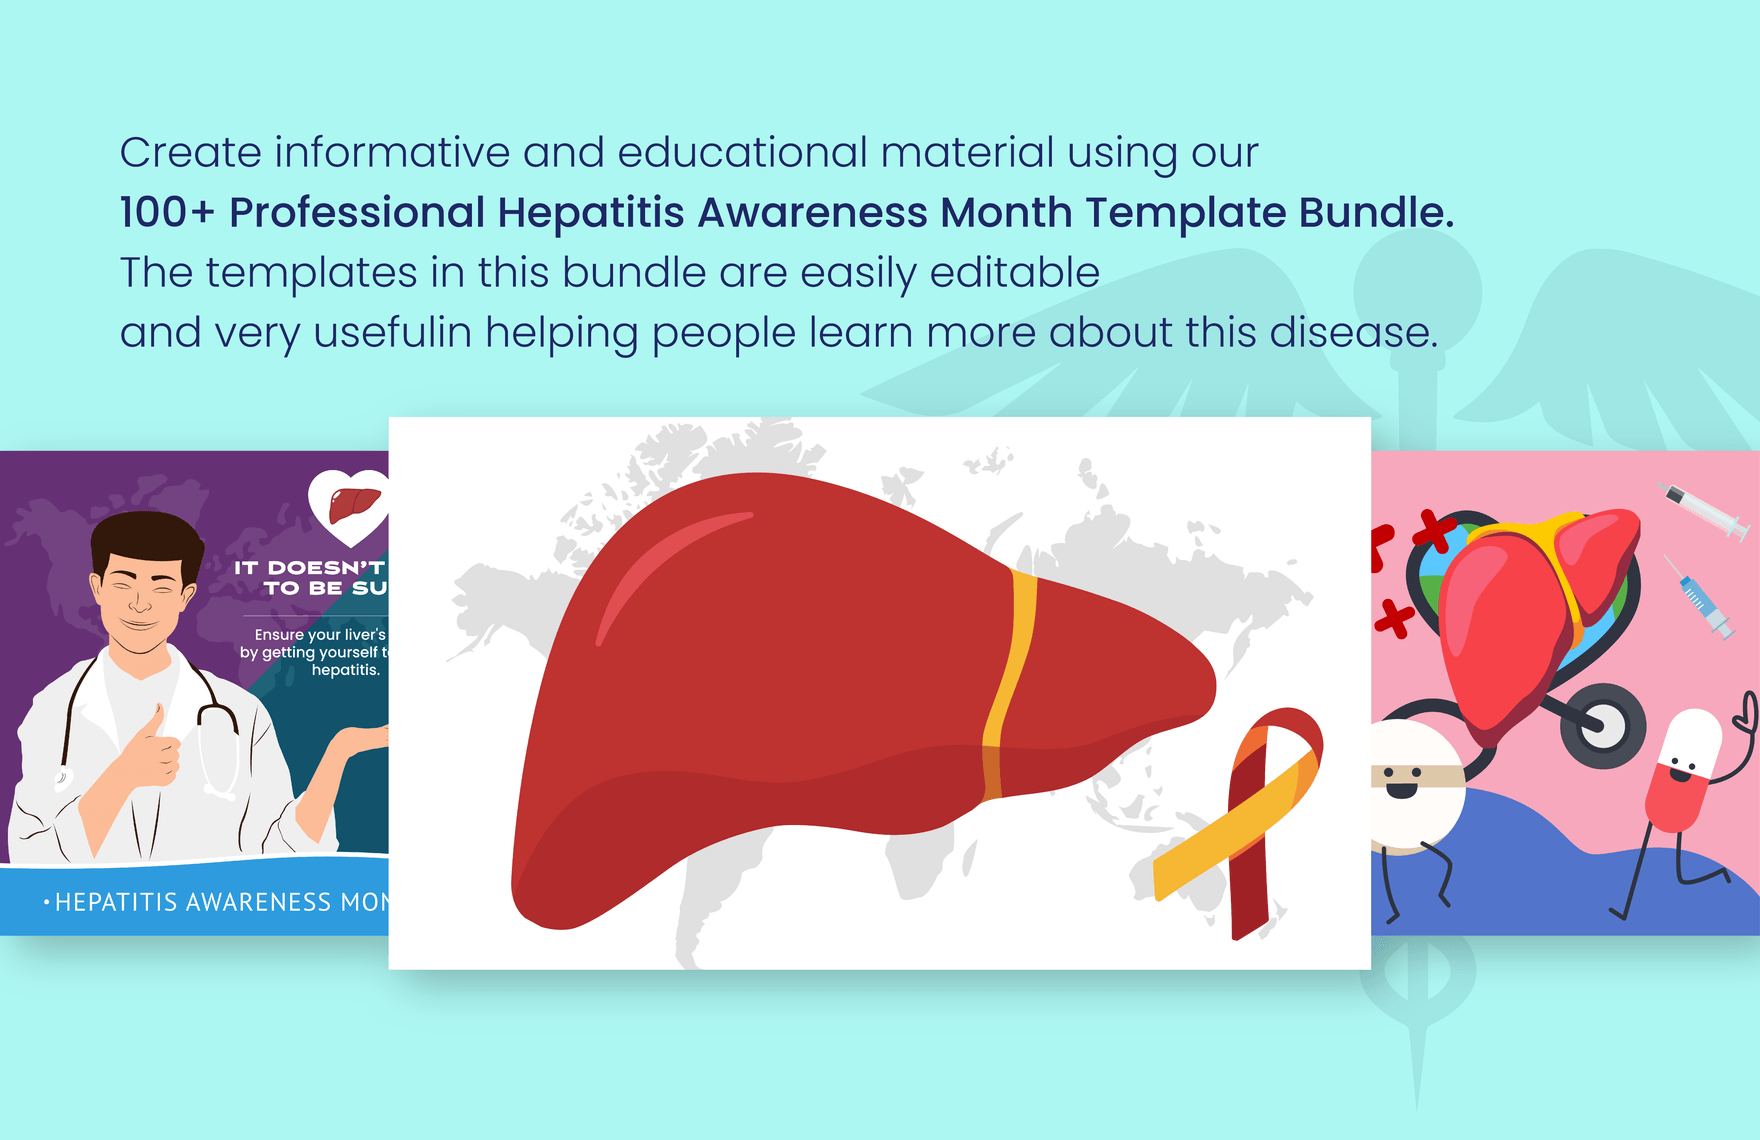 30+ Professional Hepatitis Awareness Month Template Bundle in Word, Google Docs, PDF, Illustrator, PSD, EPS, SVG, PNG, JPEG